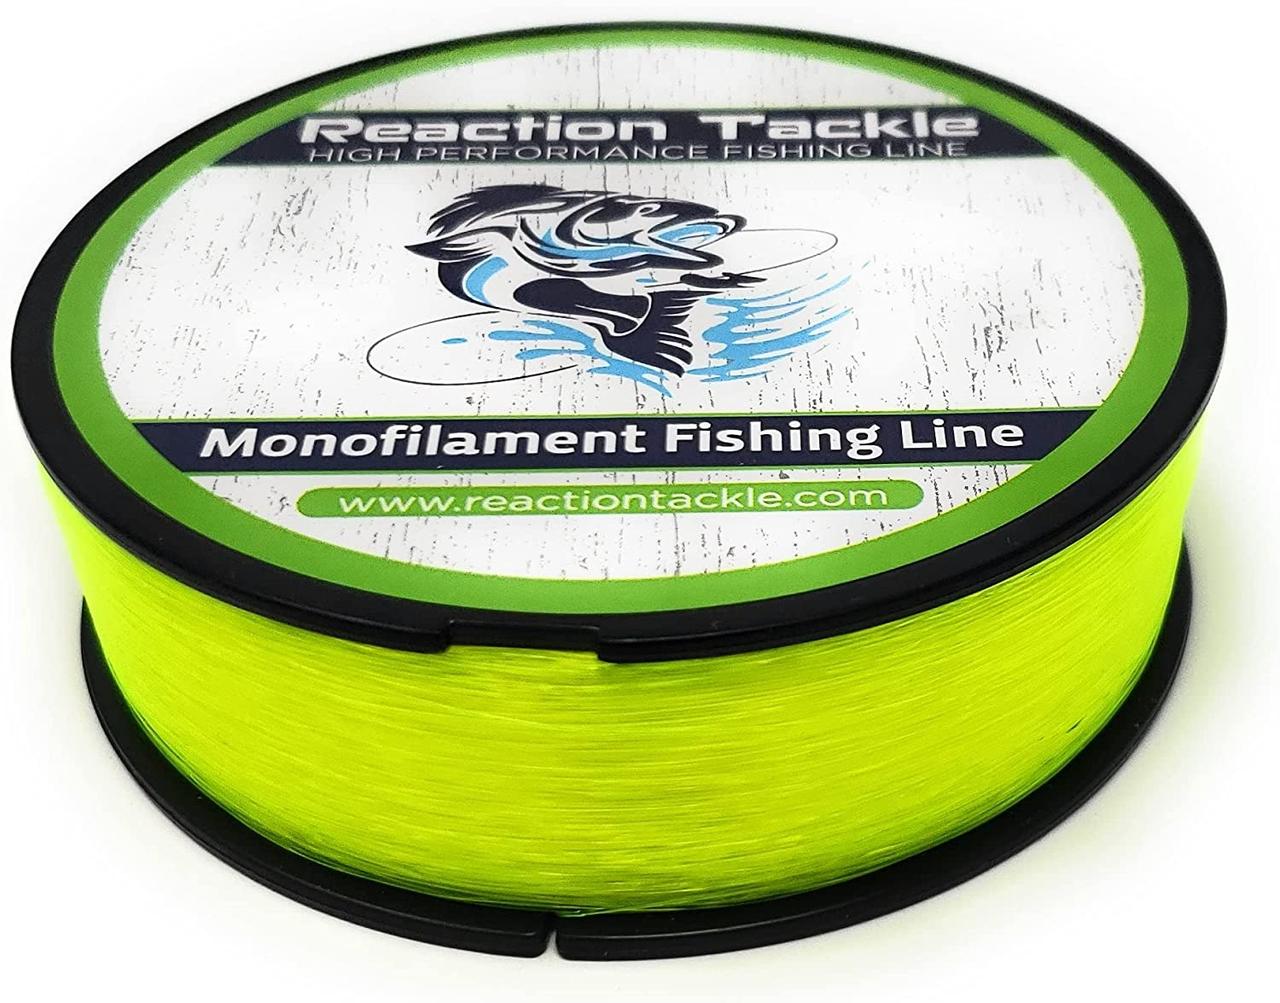 Reaction Tackle Monofilament Fishing line - Best Mono Fishing Line